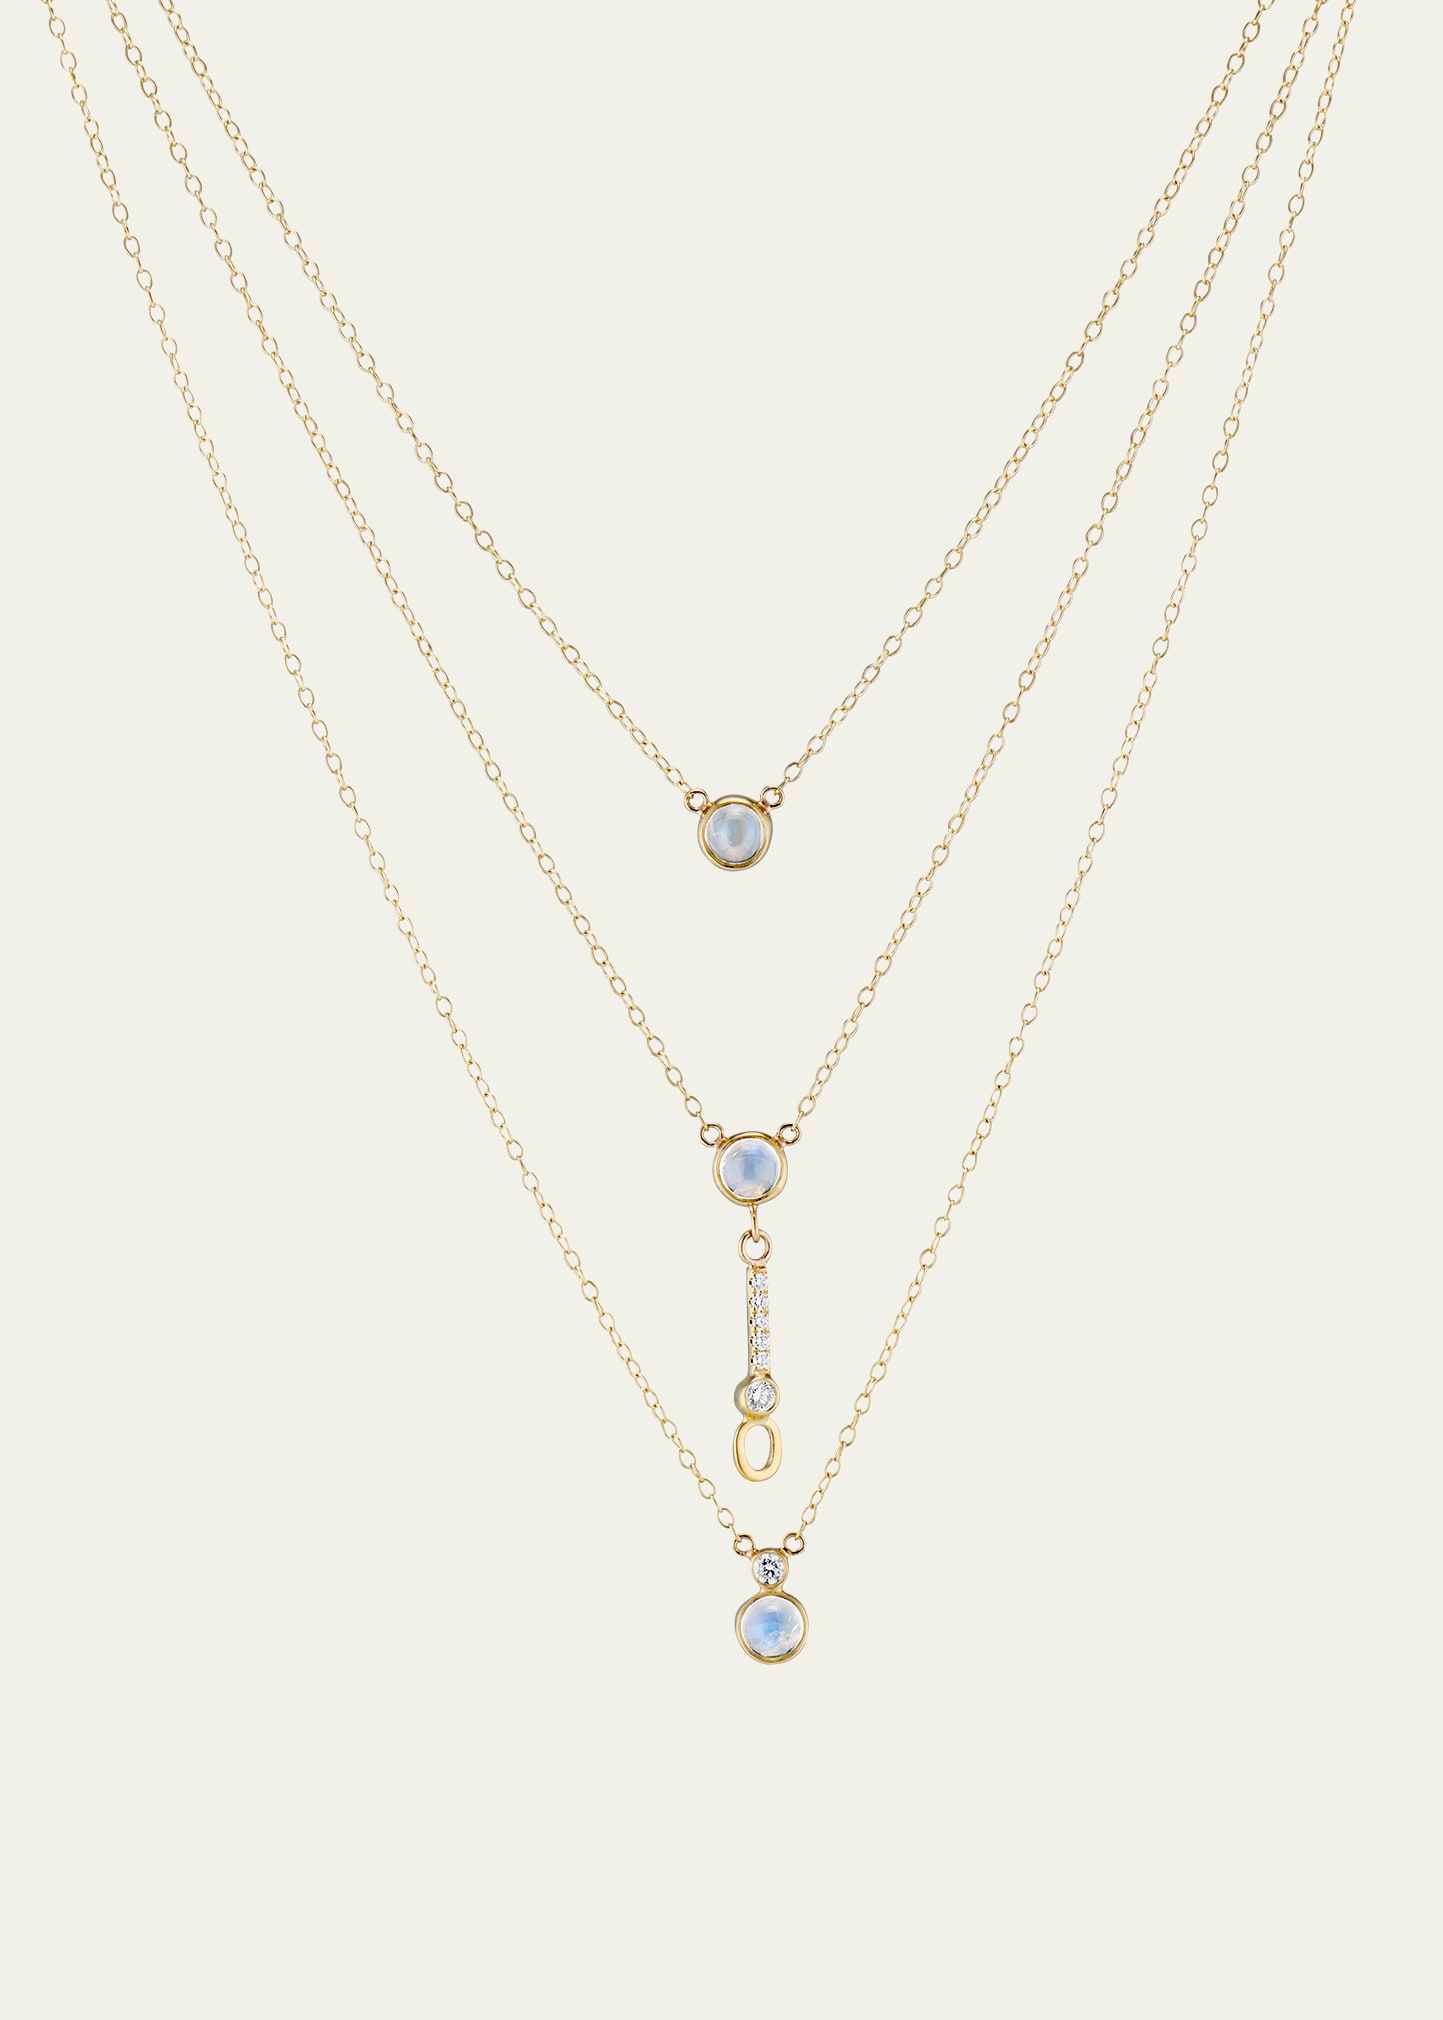 Triple Layer Diamond & Rainbow Moonstone Necklace in 18K Gold